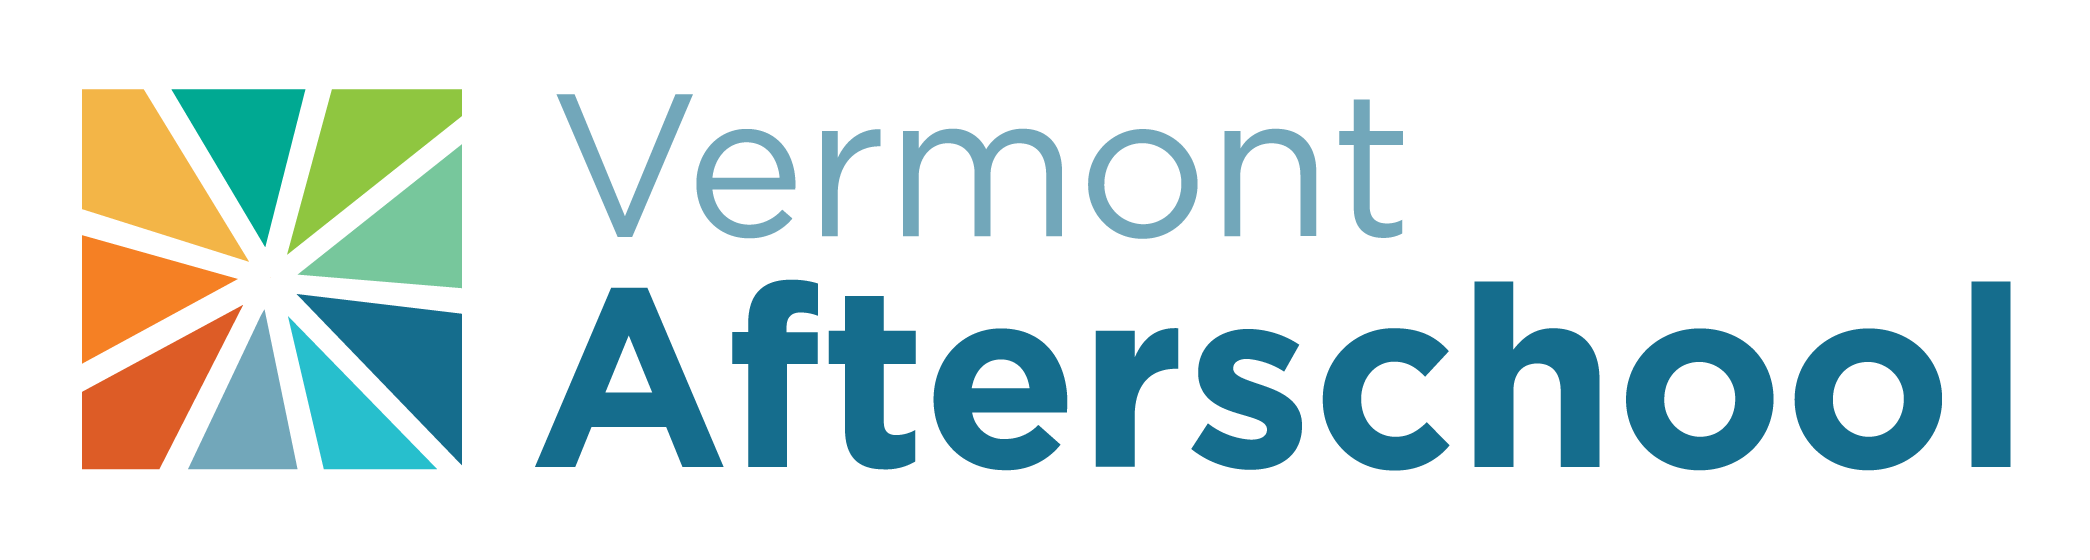 Vermont Afterschool Logo